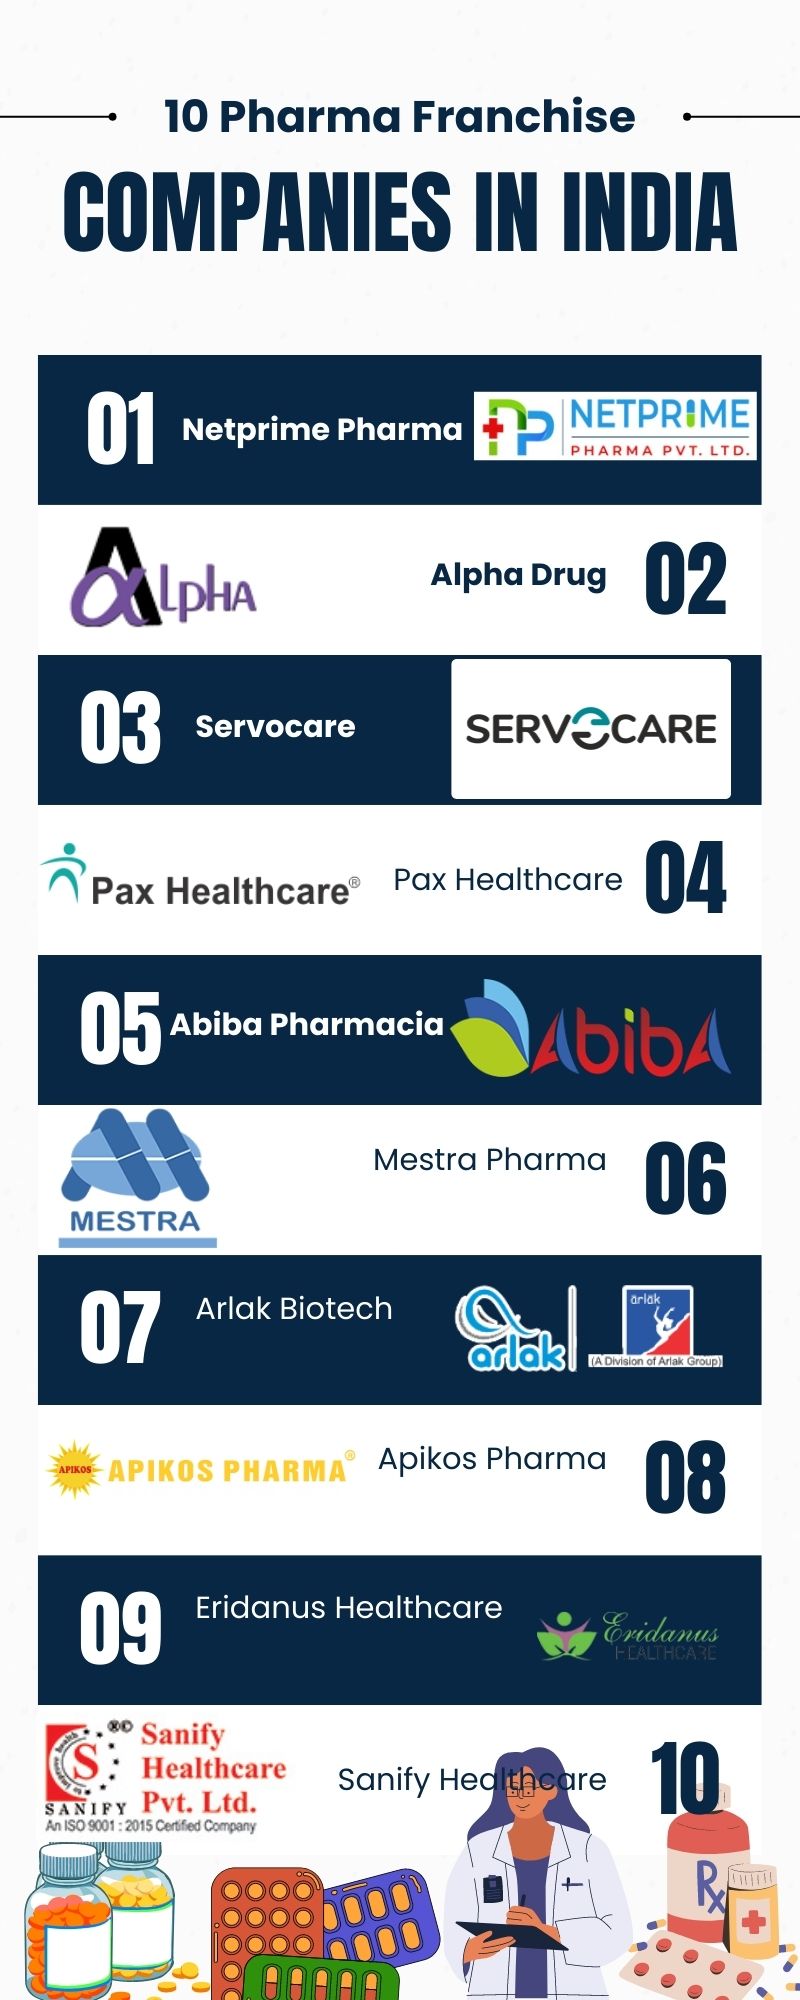 Top Pharma Franchise Companies in India 